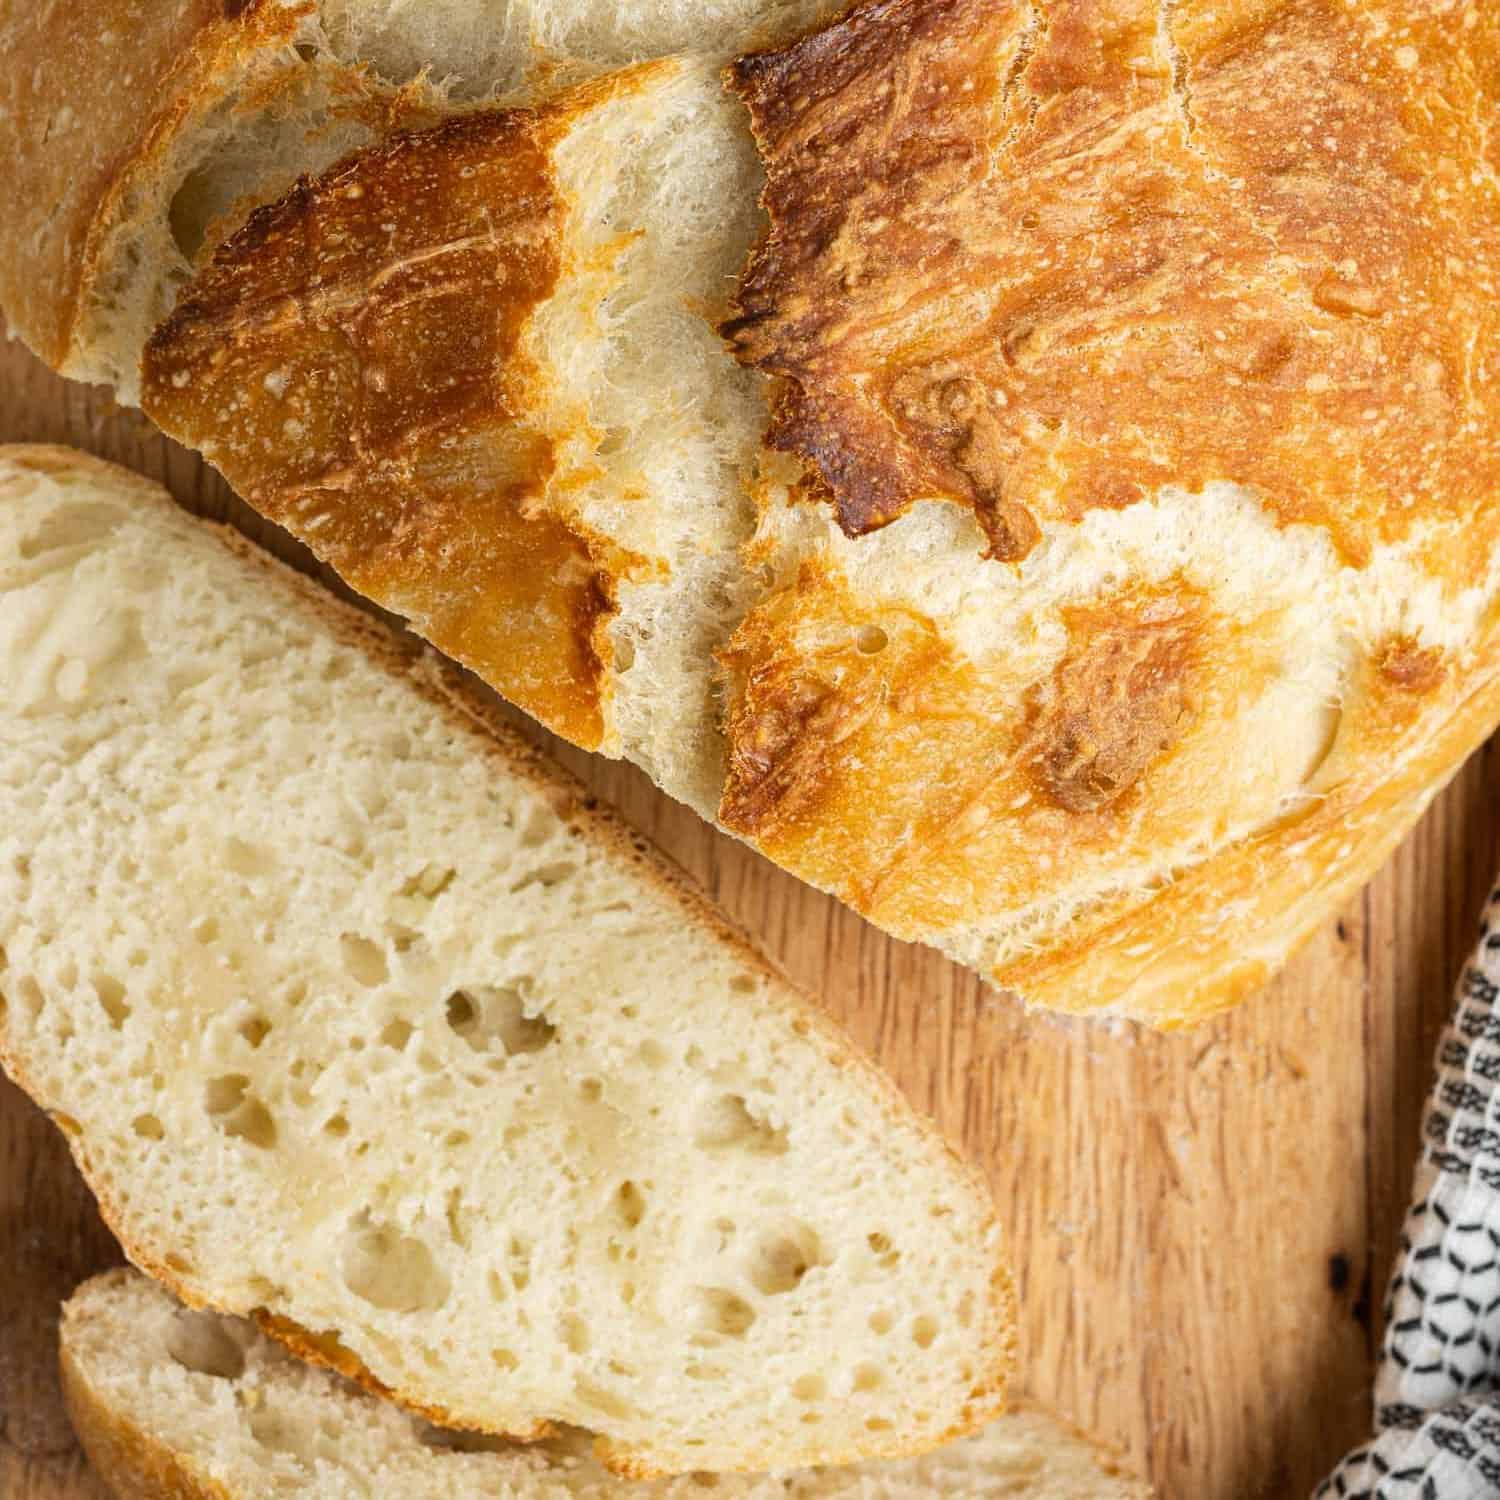 https://www.rachelcooks.com/wp-content/uploads/2021/05/dutch-oven-bread-1500-11-square.jpg